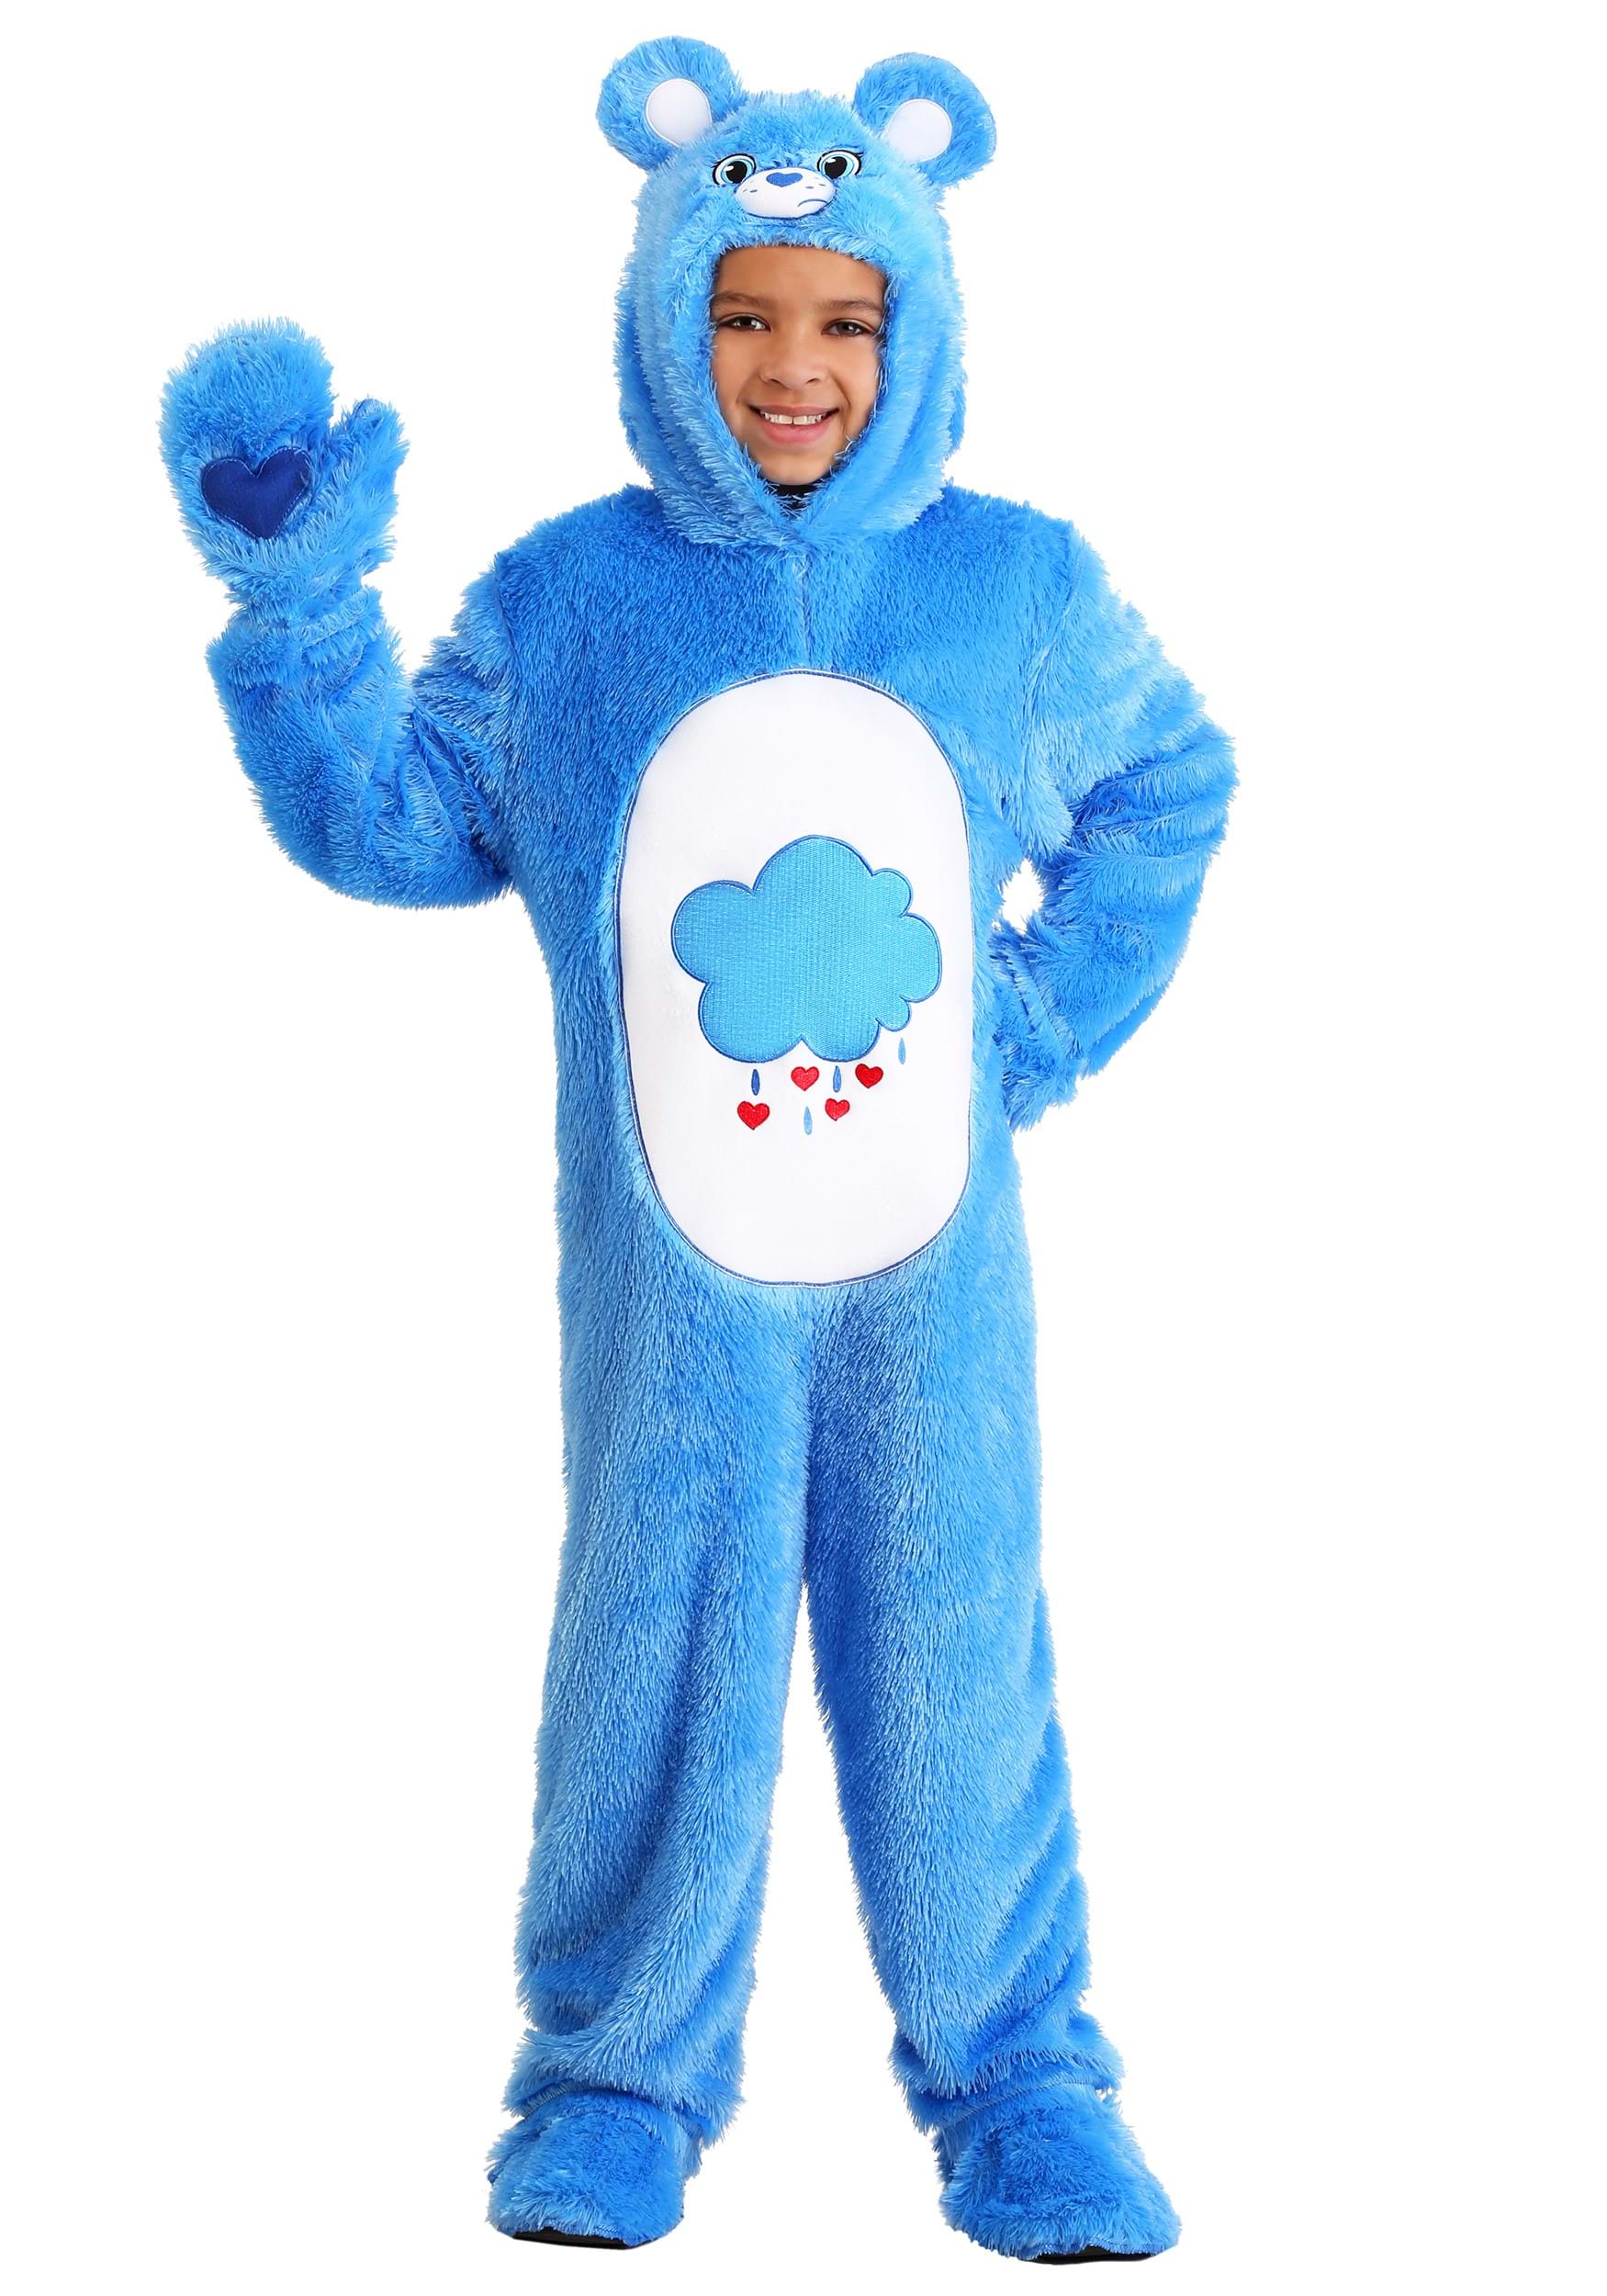 Photos - Fancy Dress CARE FUN Costumes  Bears Classic Grumpy Bear Costume for Kids |  Bears 